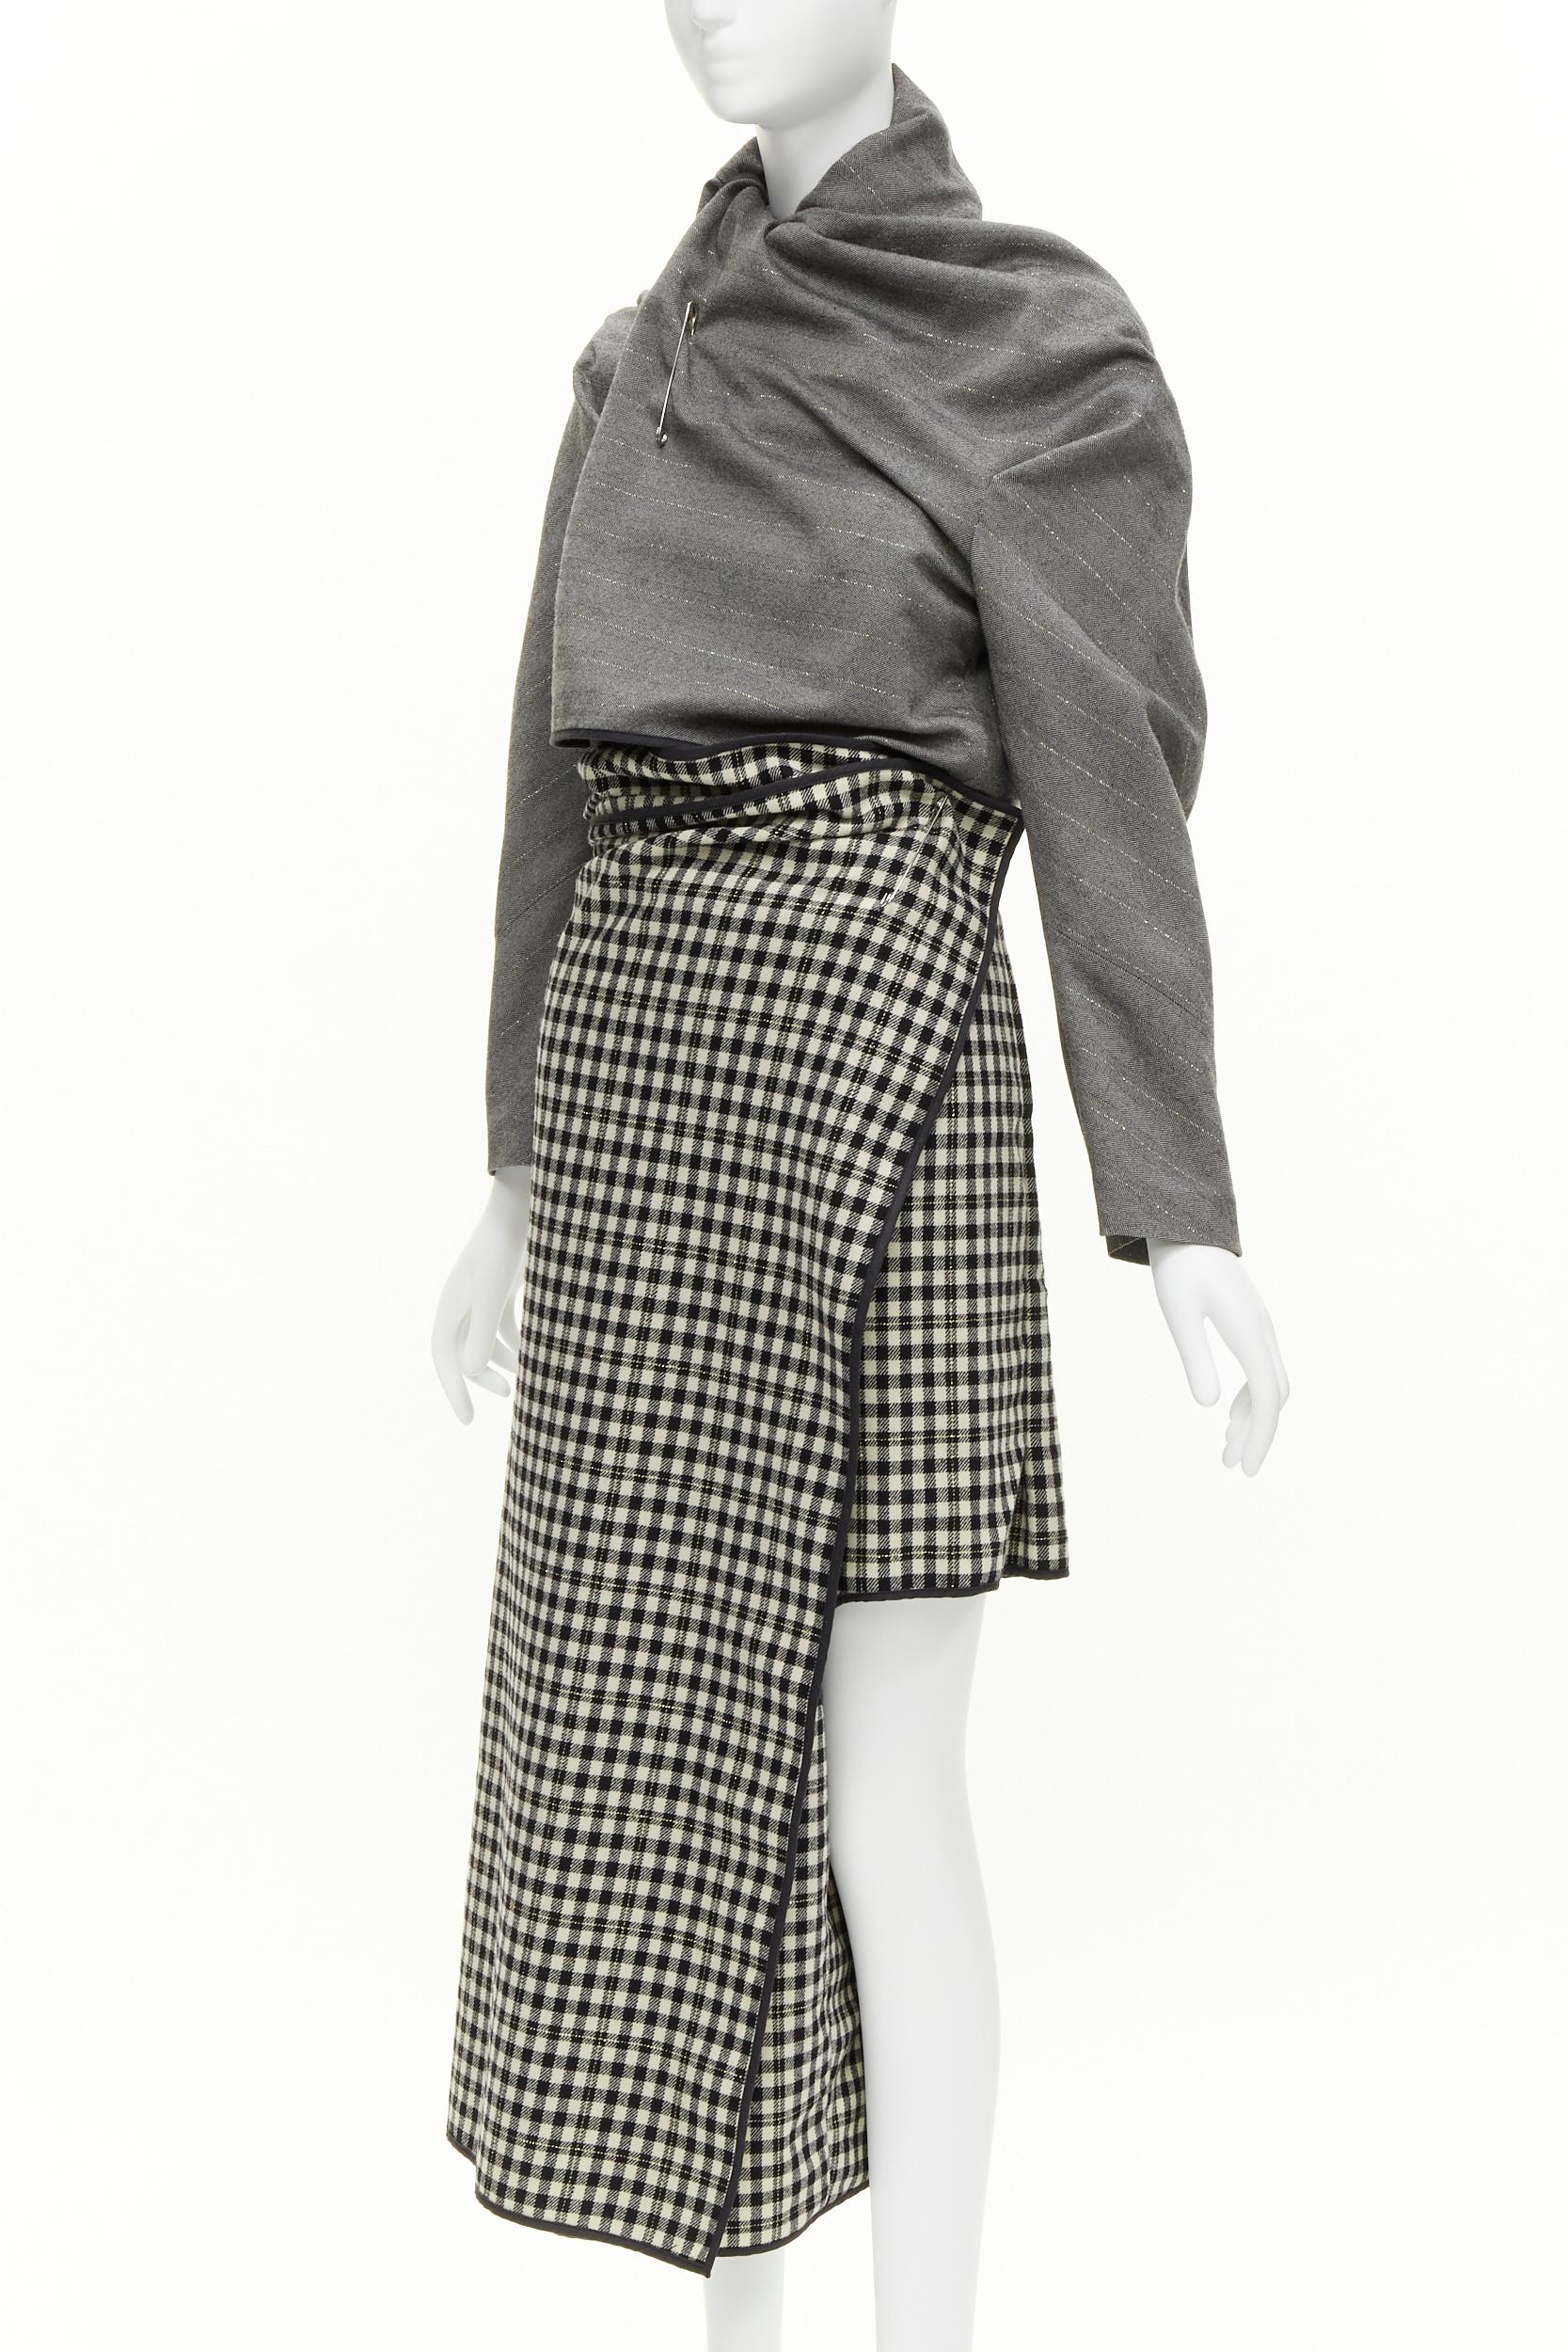 COMME DES GARCONS 1999 Vintage Runway grey wrap jacket checked skirt set 4